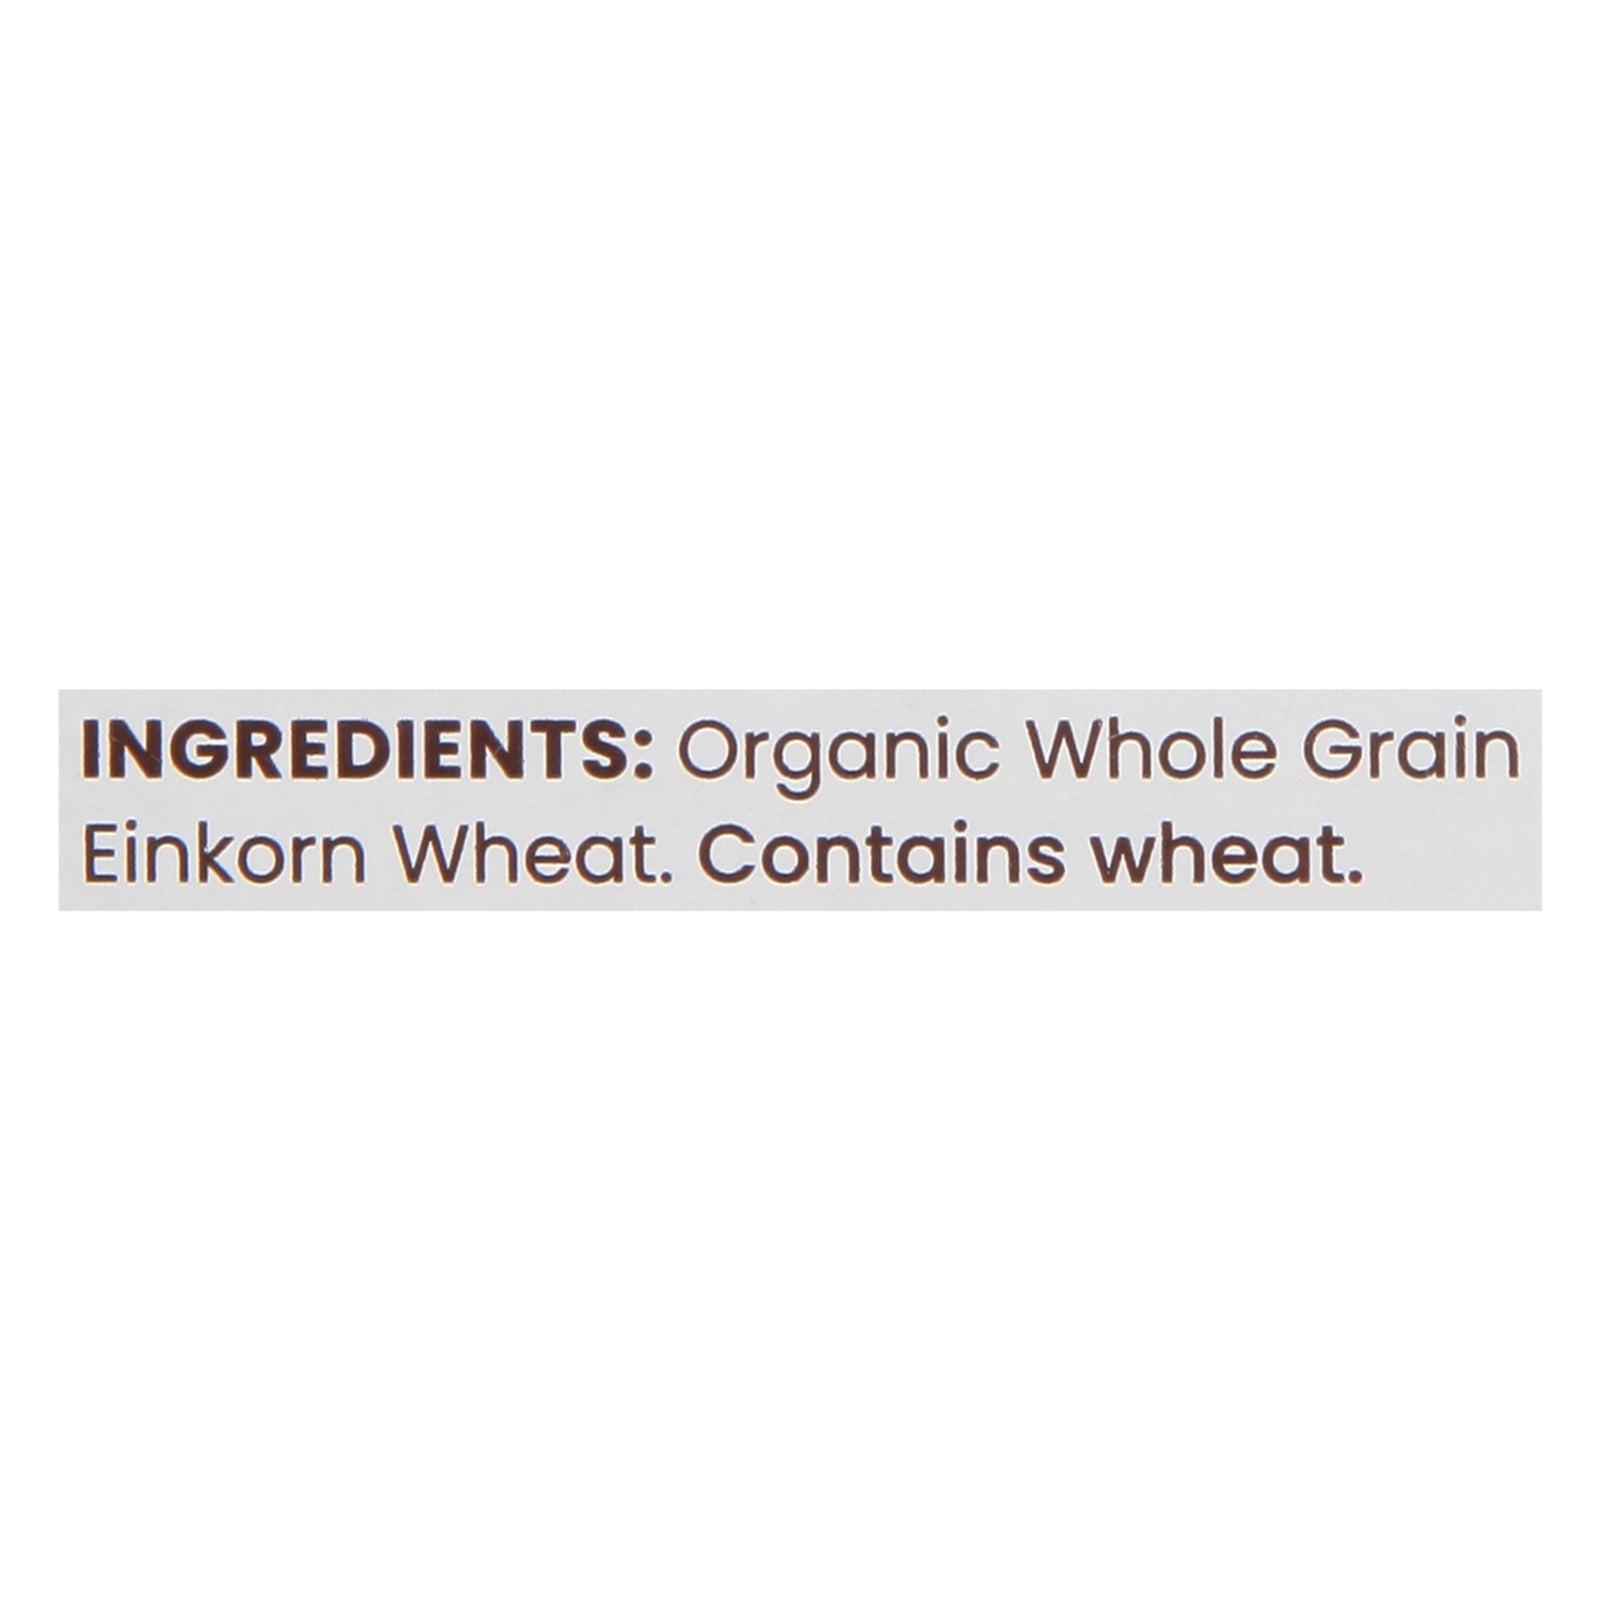 Jovial - Wheat Berries - Organic - Einkorn - 16 Oz - Case Of 12